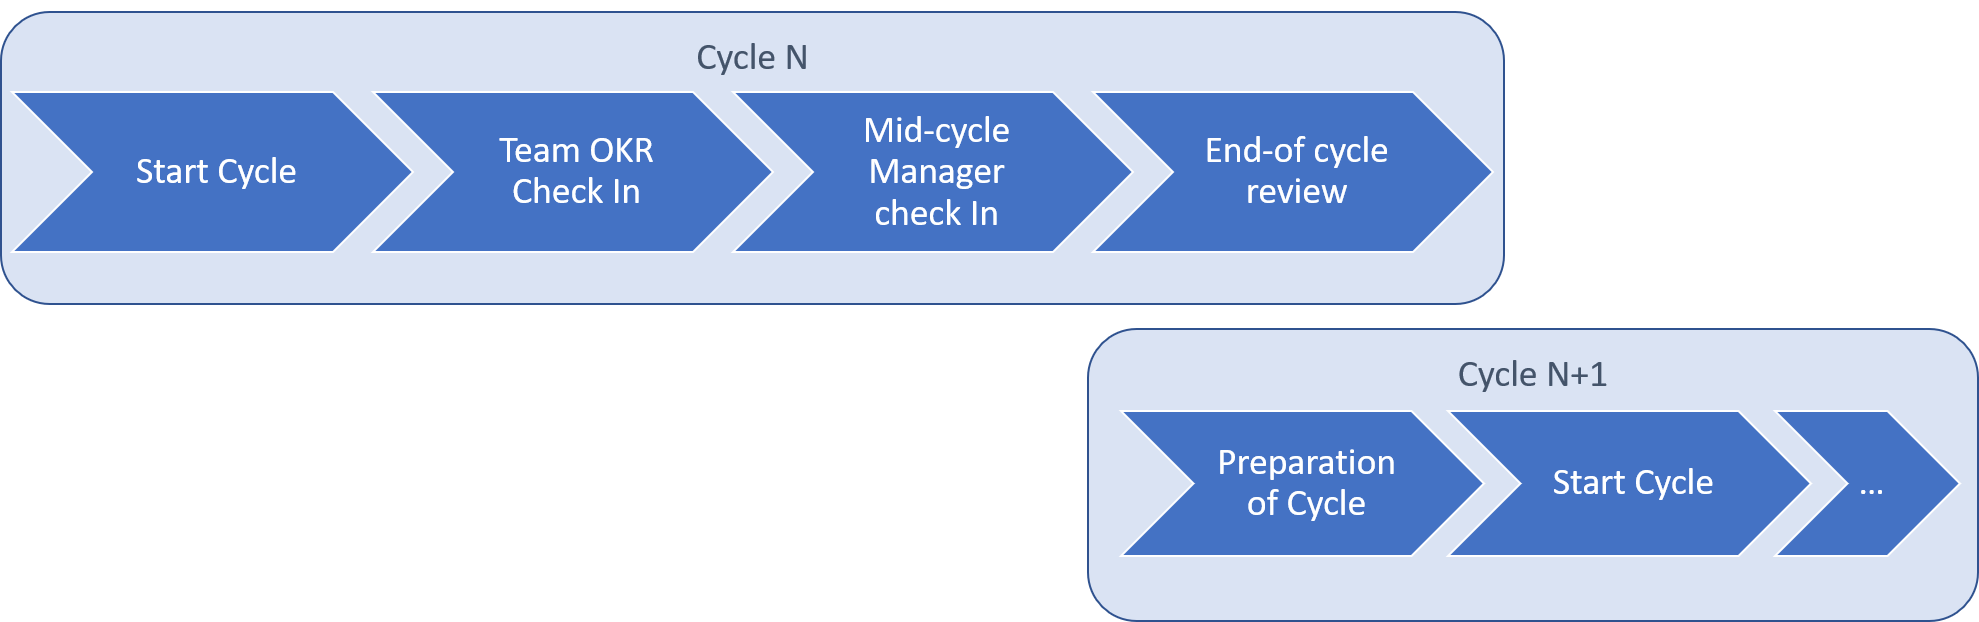 Un cycle OKR typique